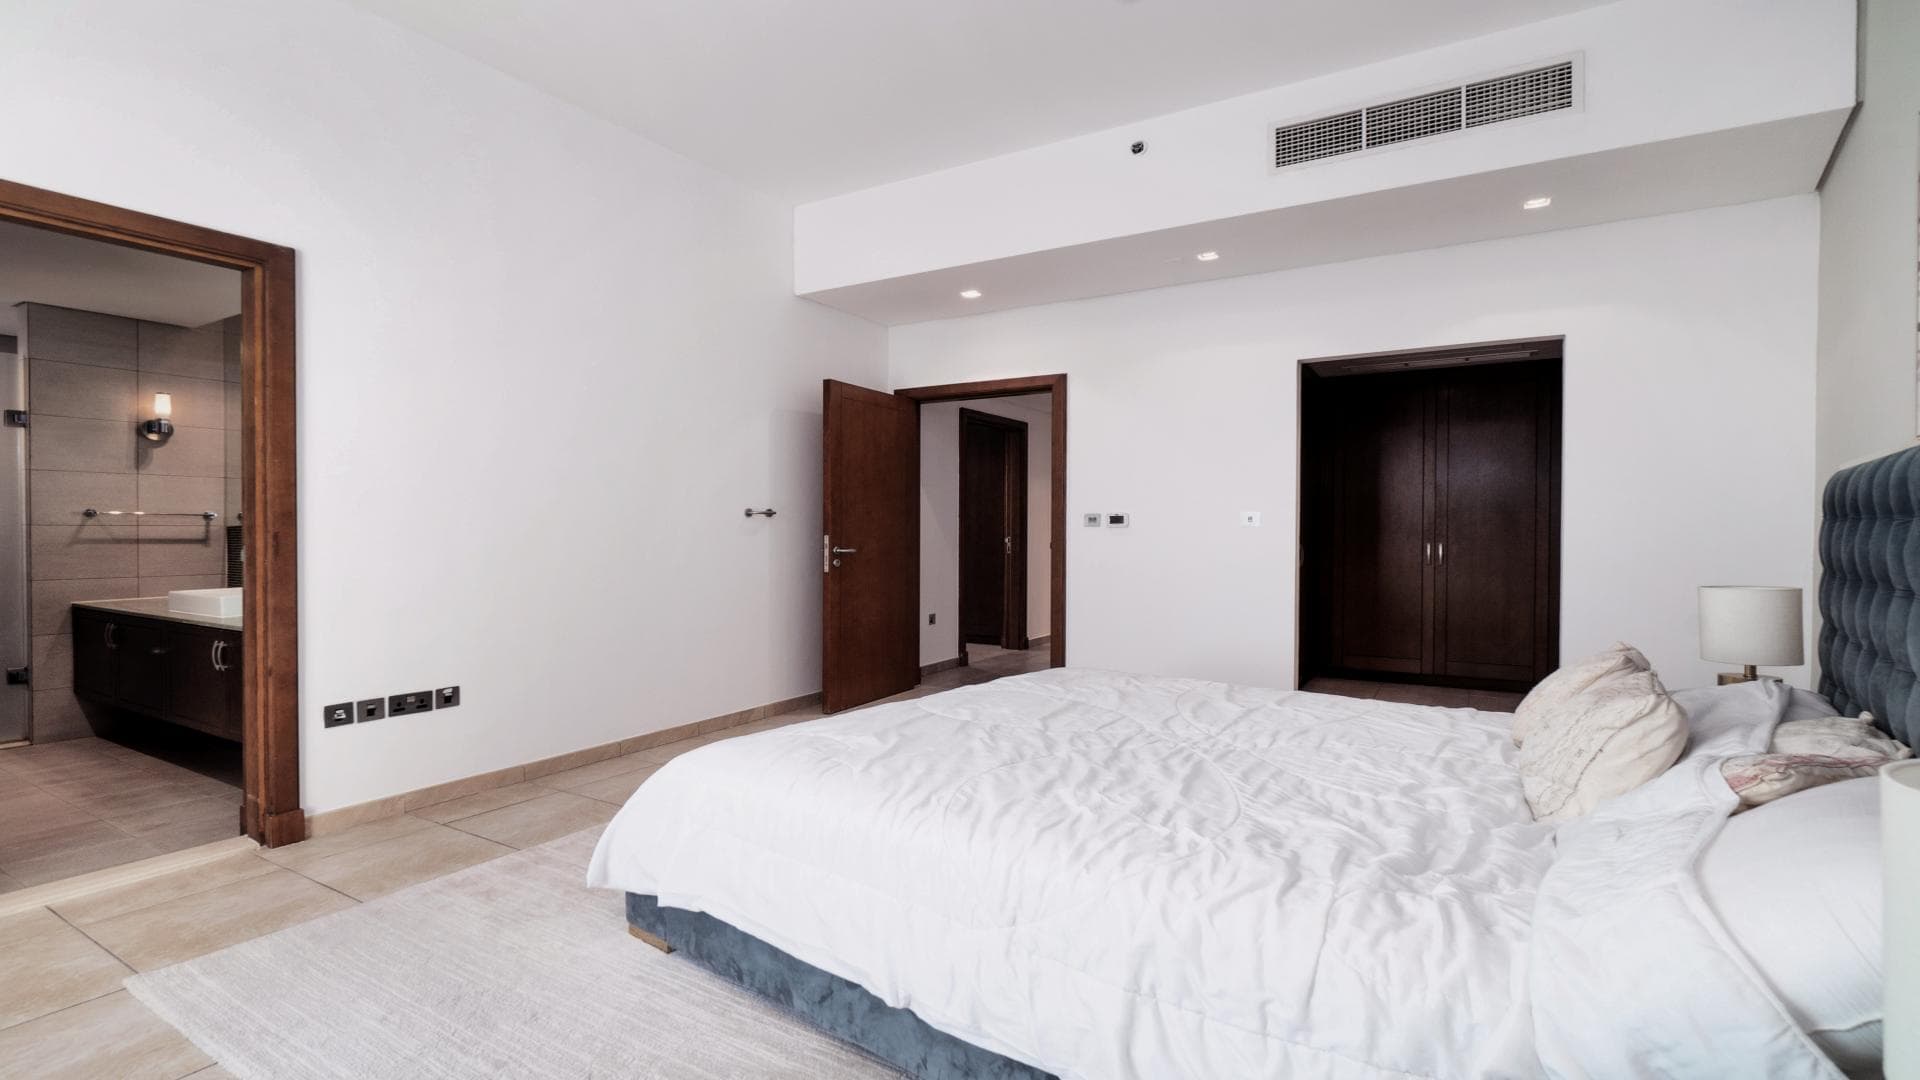 3 Bedroom Apartment For Sale Marina Residences Lp17100 195b3dabf831f600.jpg